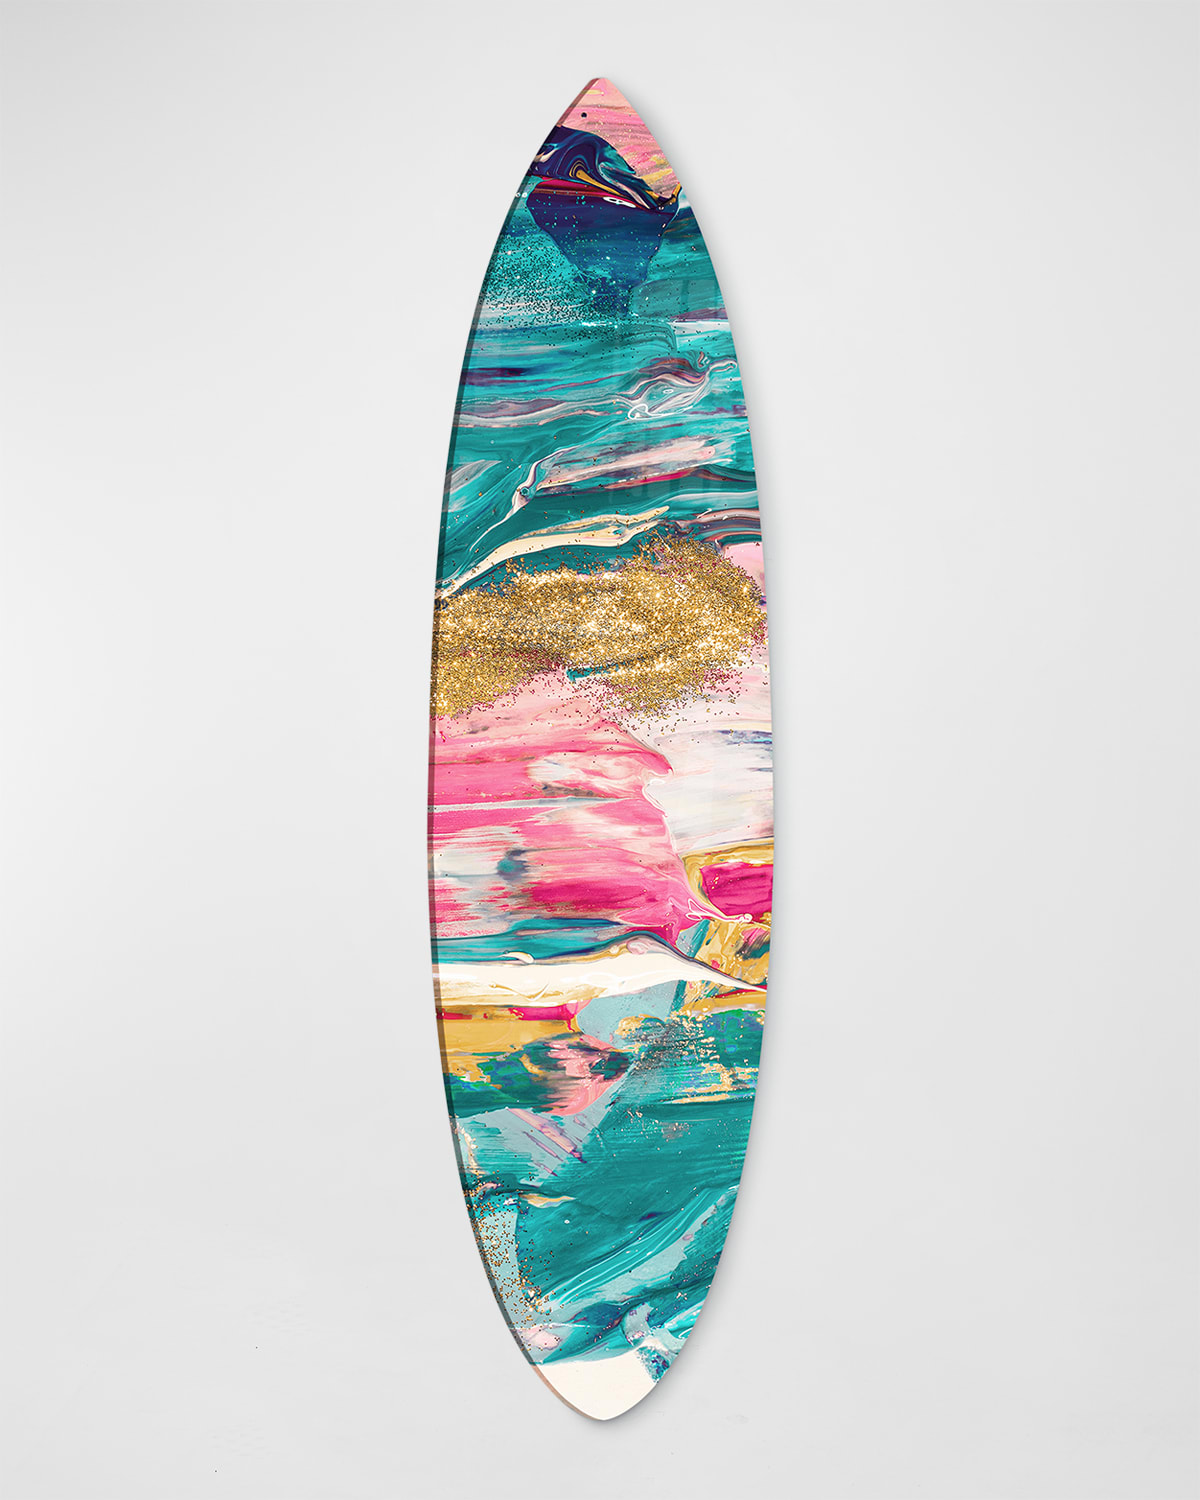 Shop The Oliver Gal Artist Co. Decorative Surfboard Art In Blue